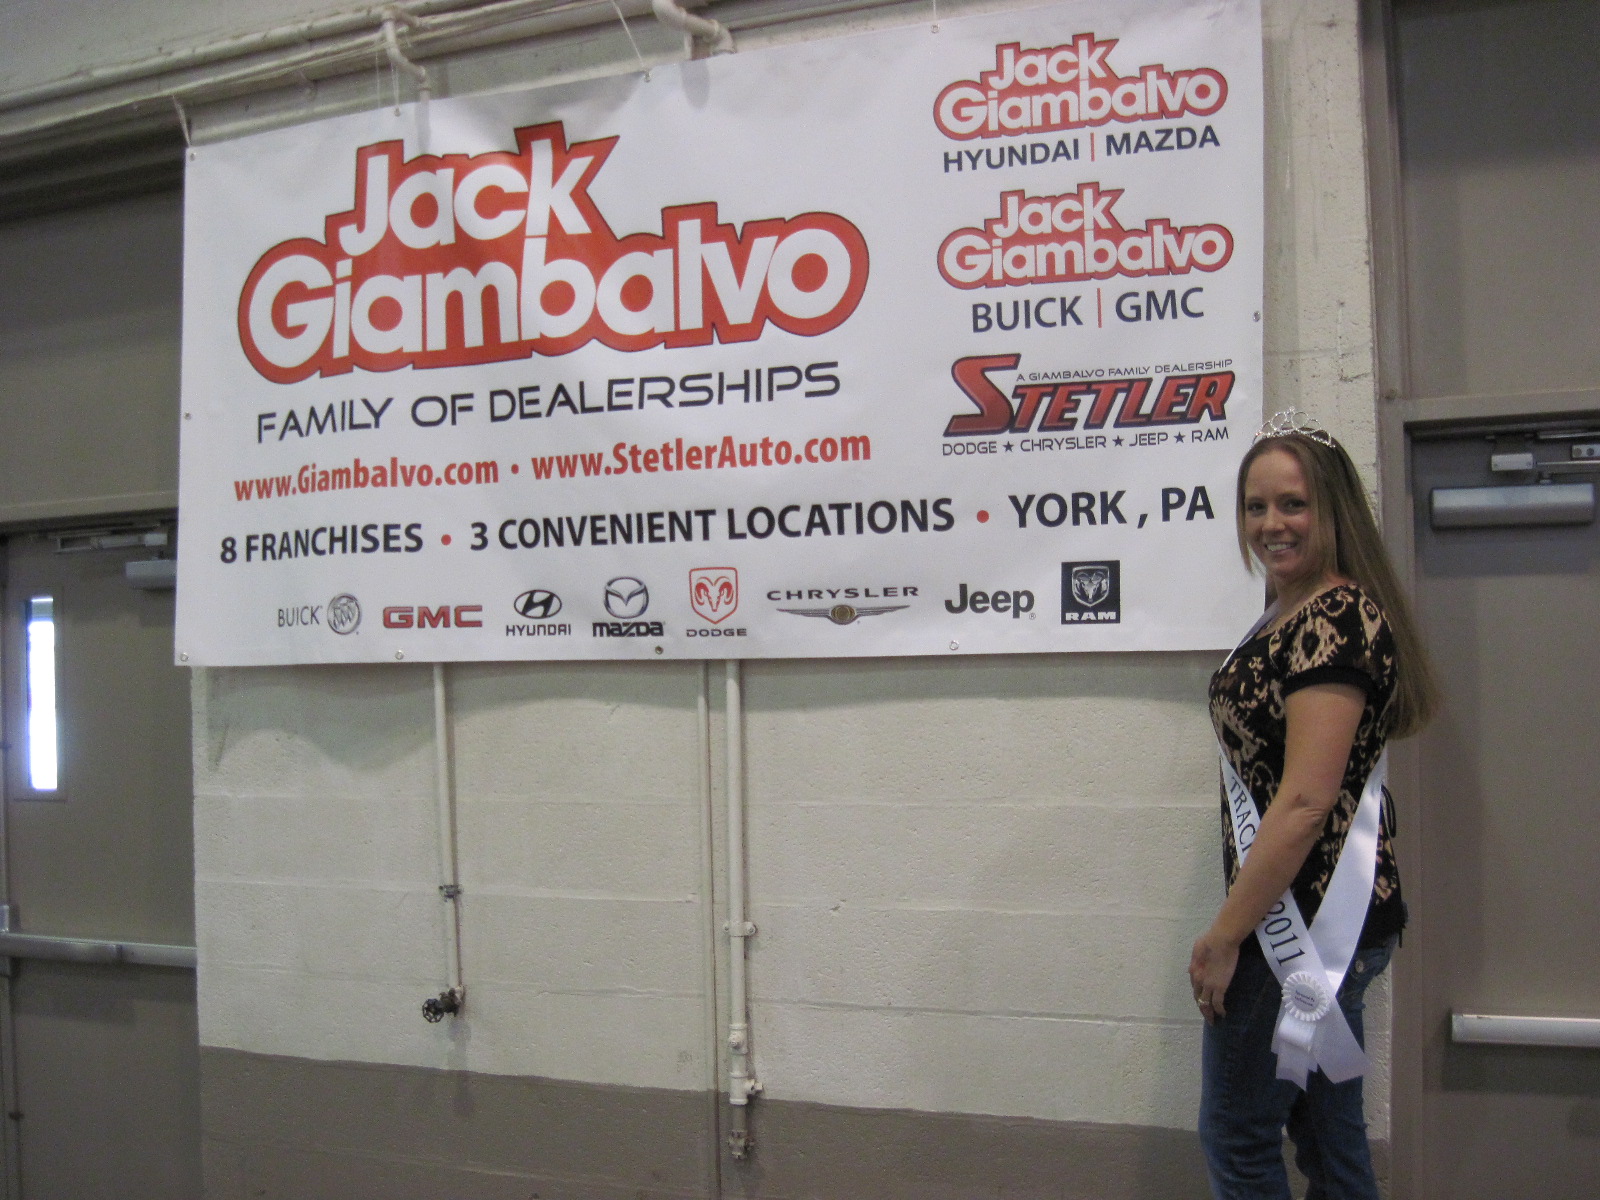 2011 sponsor Jack Giambalvo Motor Company
